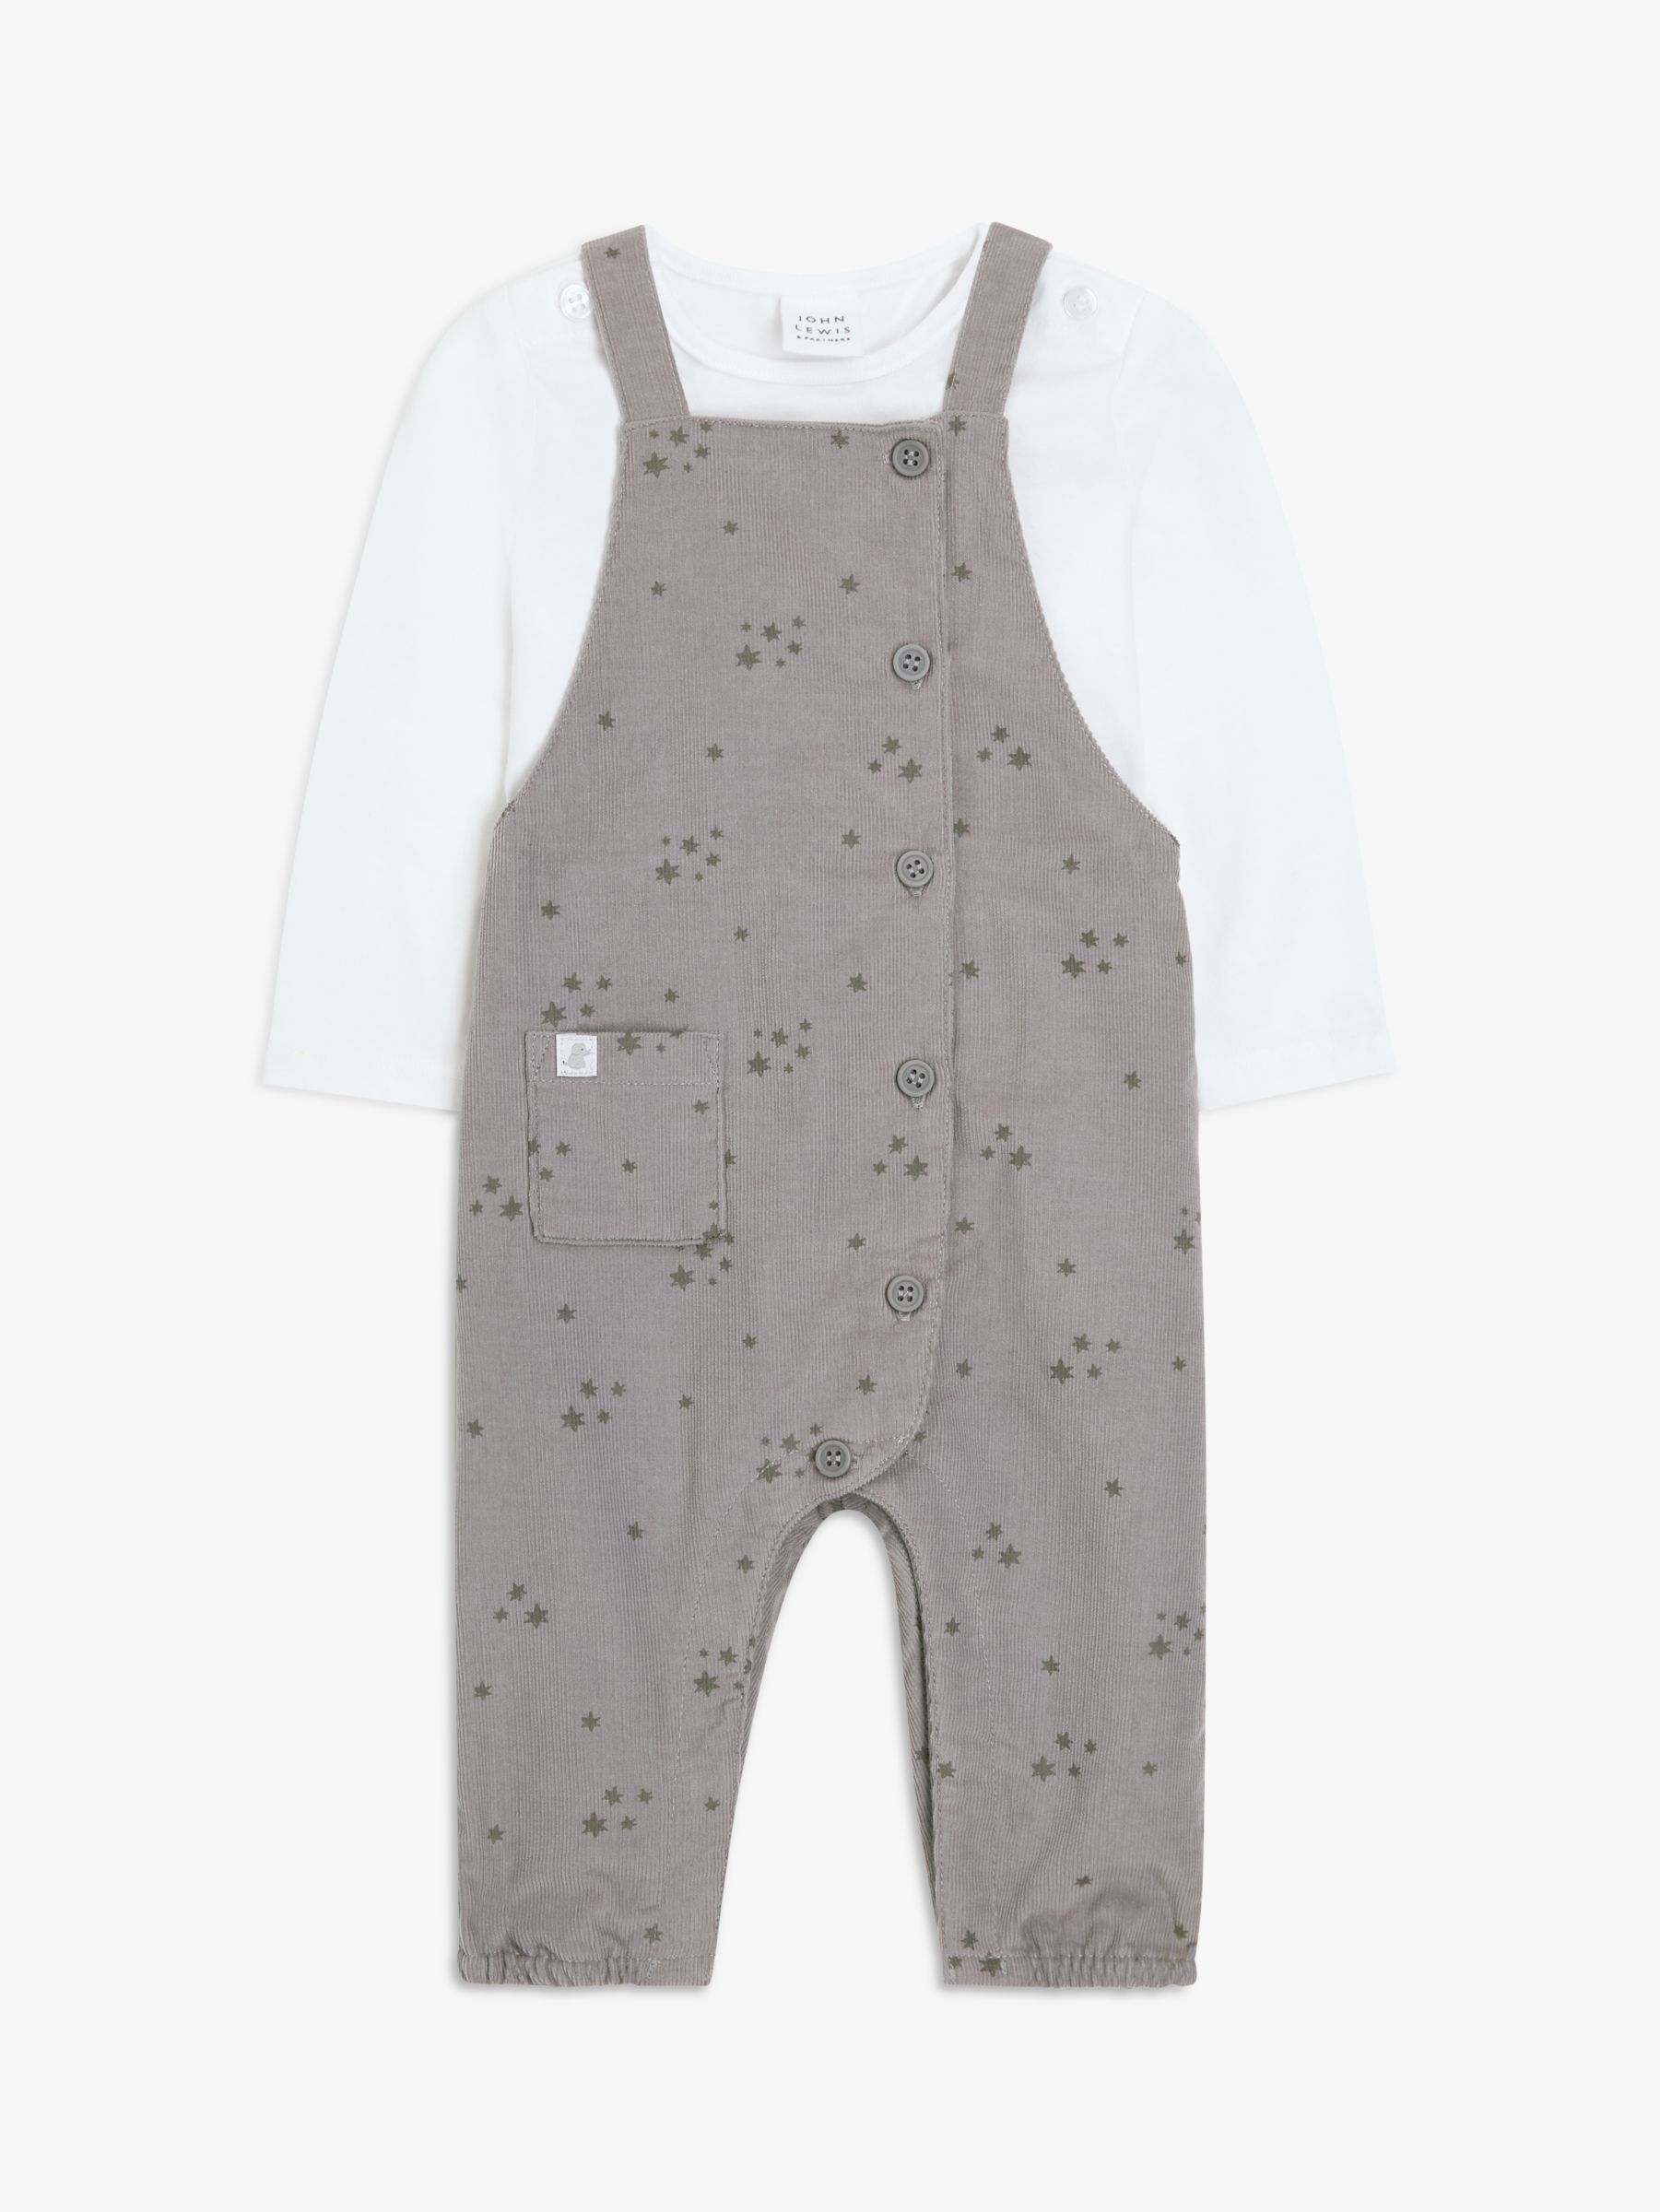 John Lewis Baby Long Sleeve Tee & Star Print Dungaree Set, Grey, 6-9 months